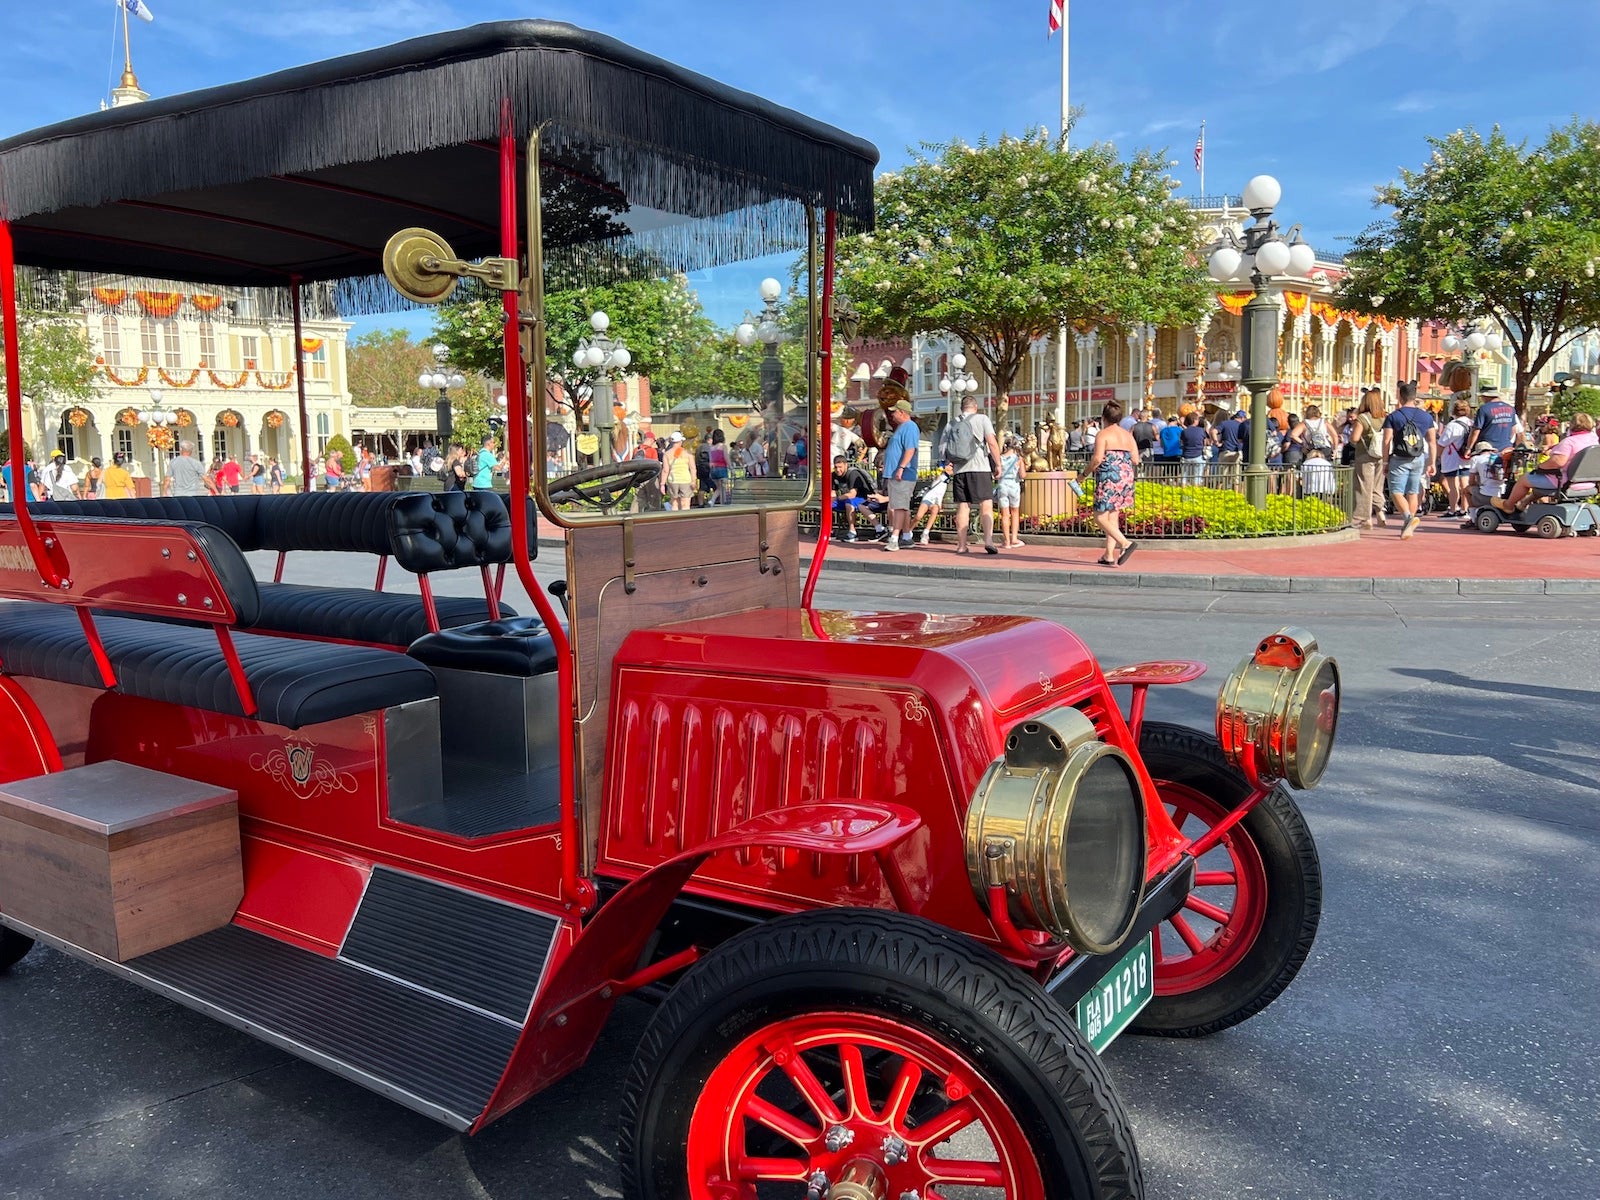 Old-fashioned vehicle at Disney World